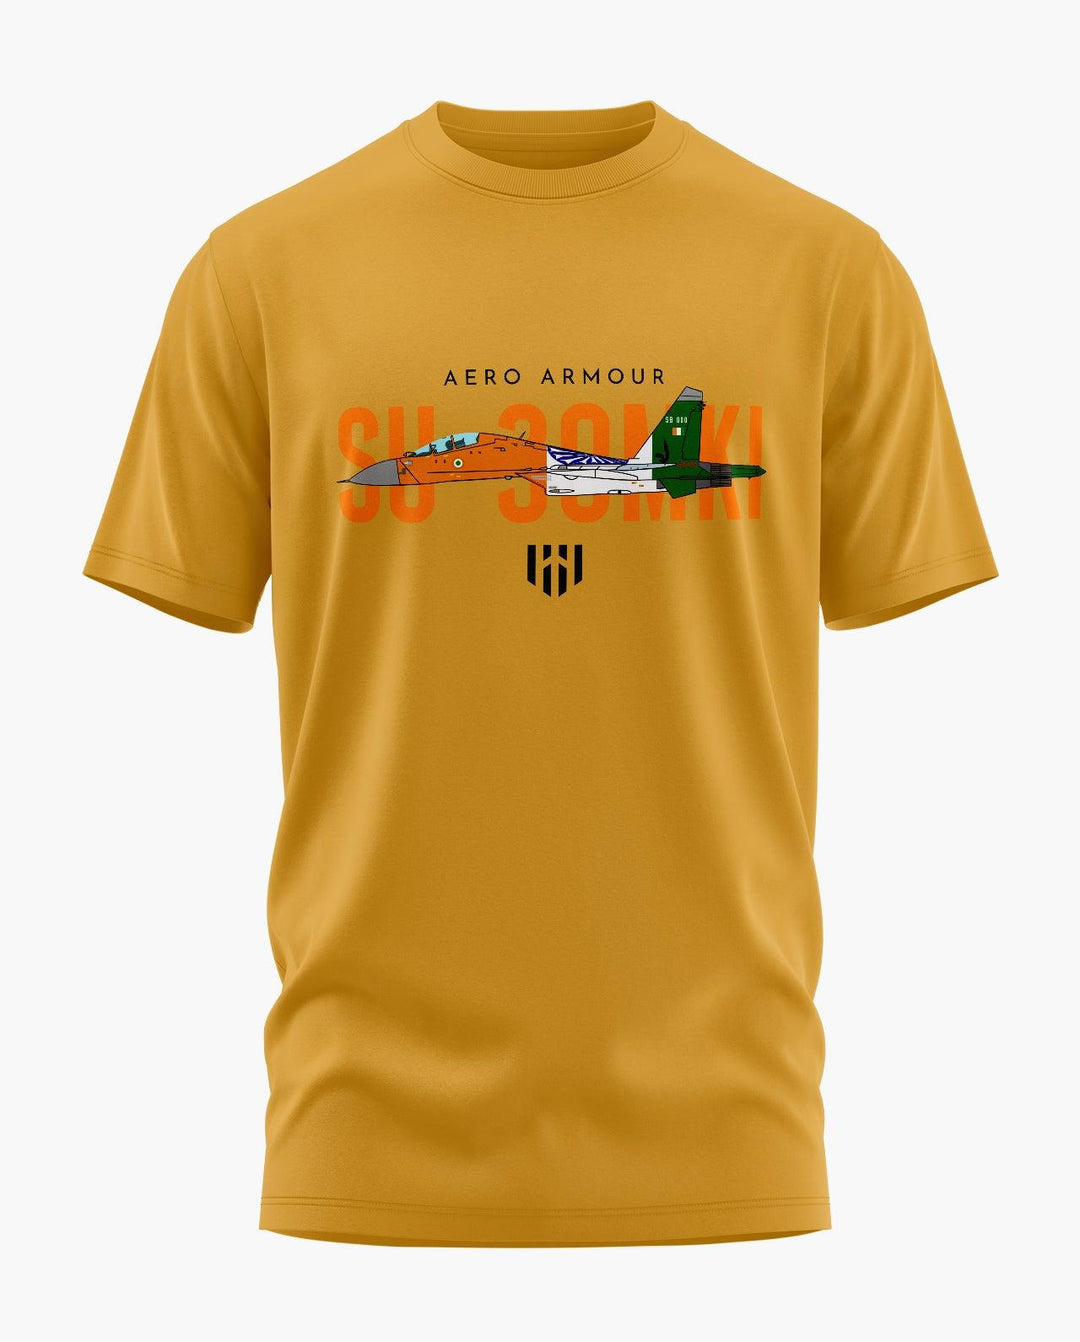 Sukhoi SU-30 MKI India T-Shirt - Aero Armour